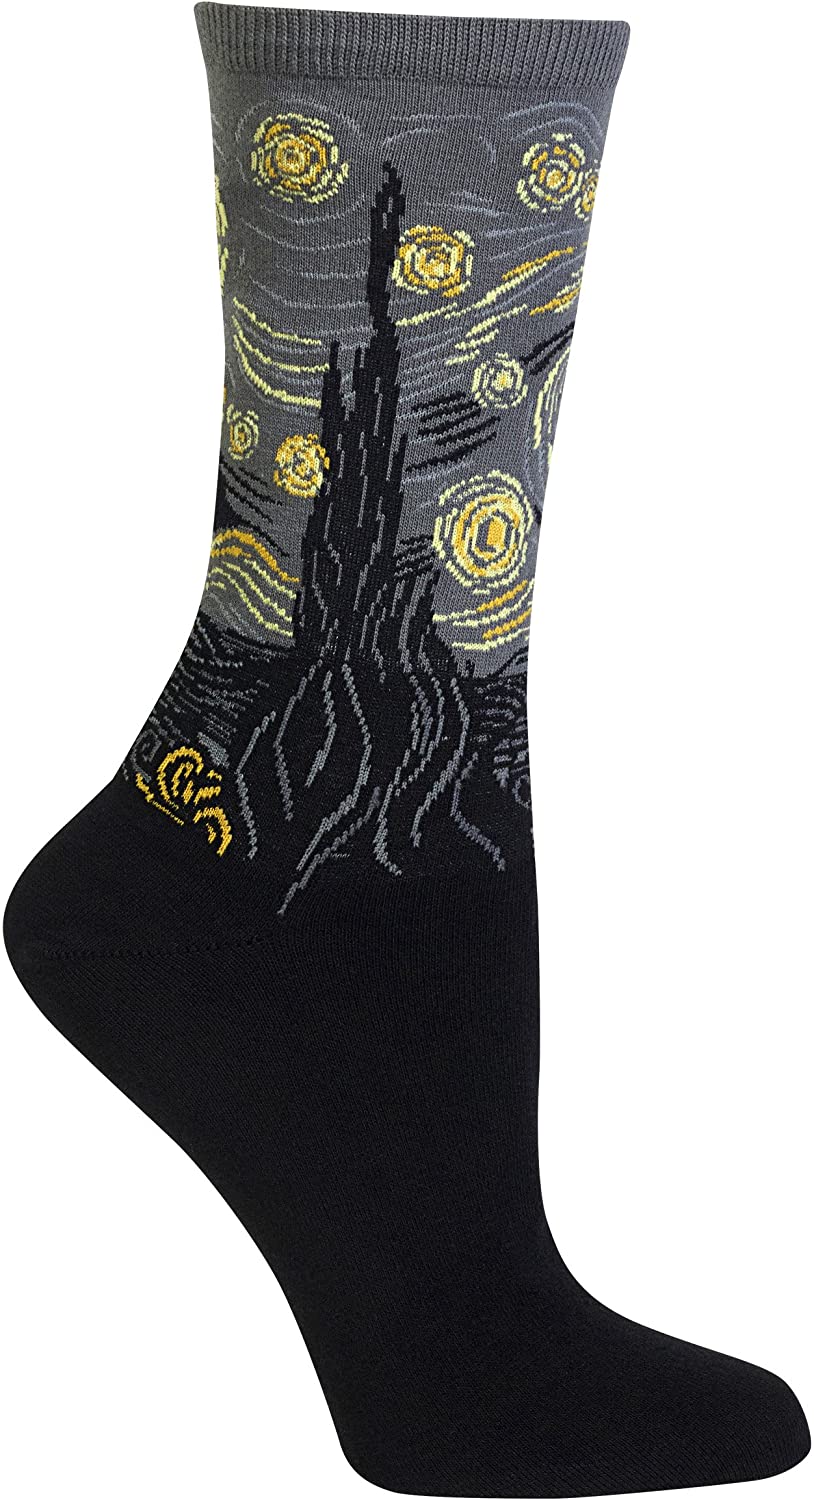 "Starry Night" Cotton Dress Crew Socks by Hot Sox-Medium